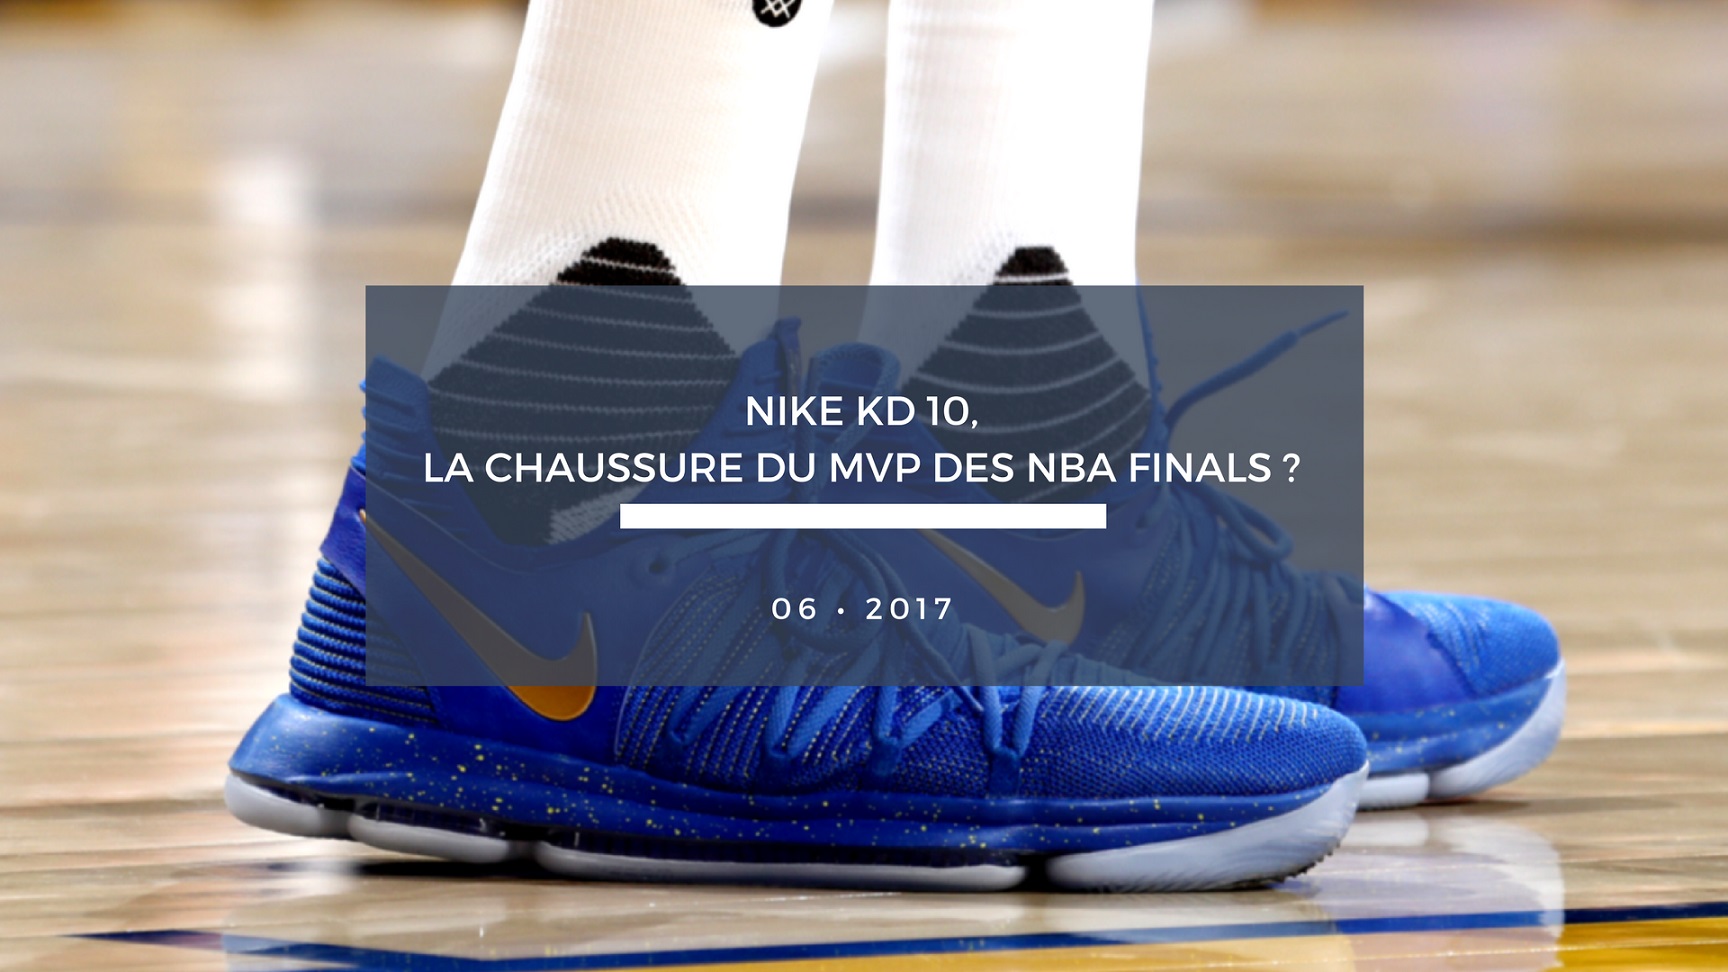 Nike KD 10, la chaussure MVP des NBA Finals ? - Cool